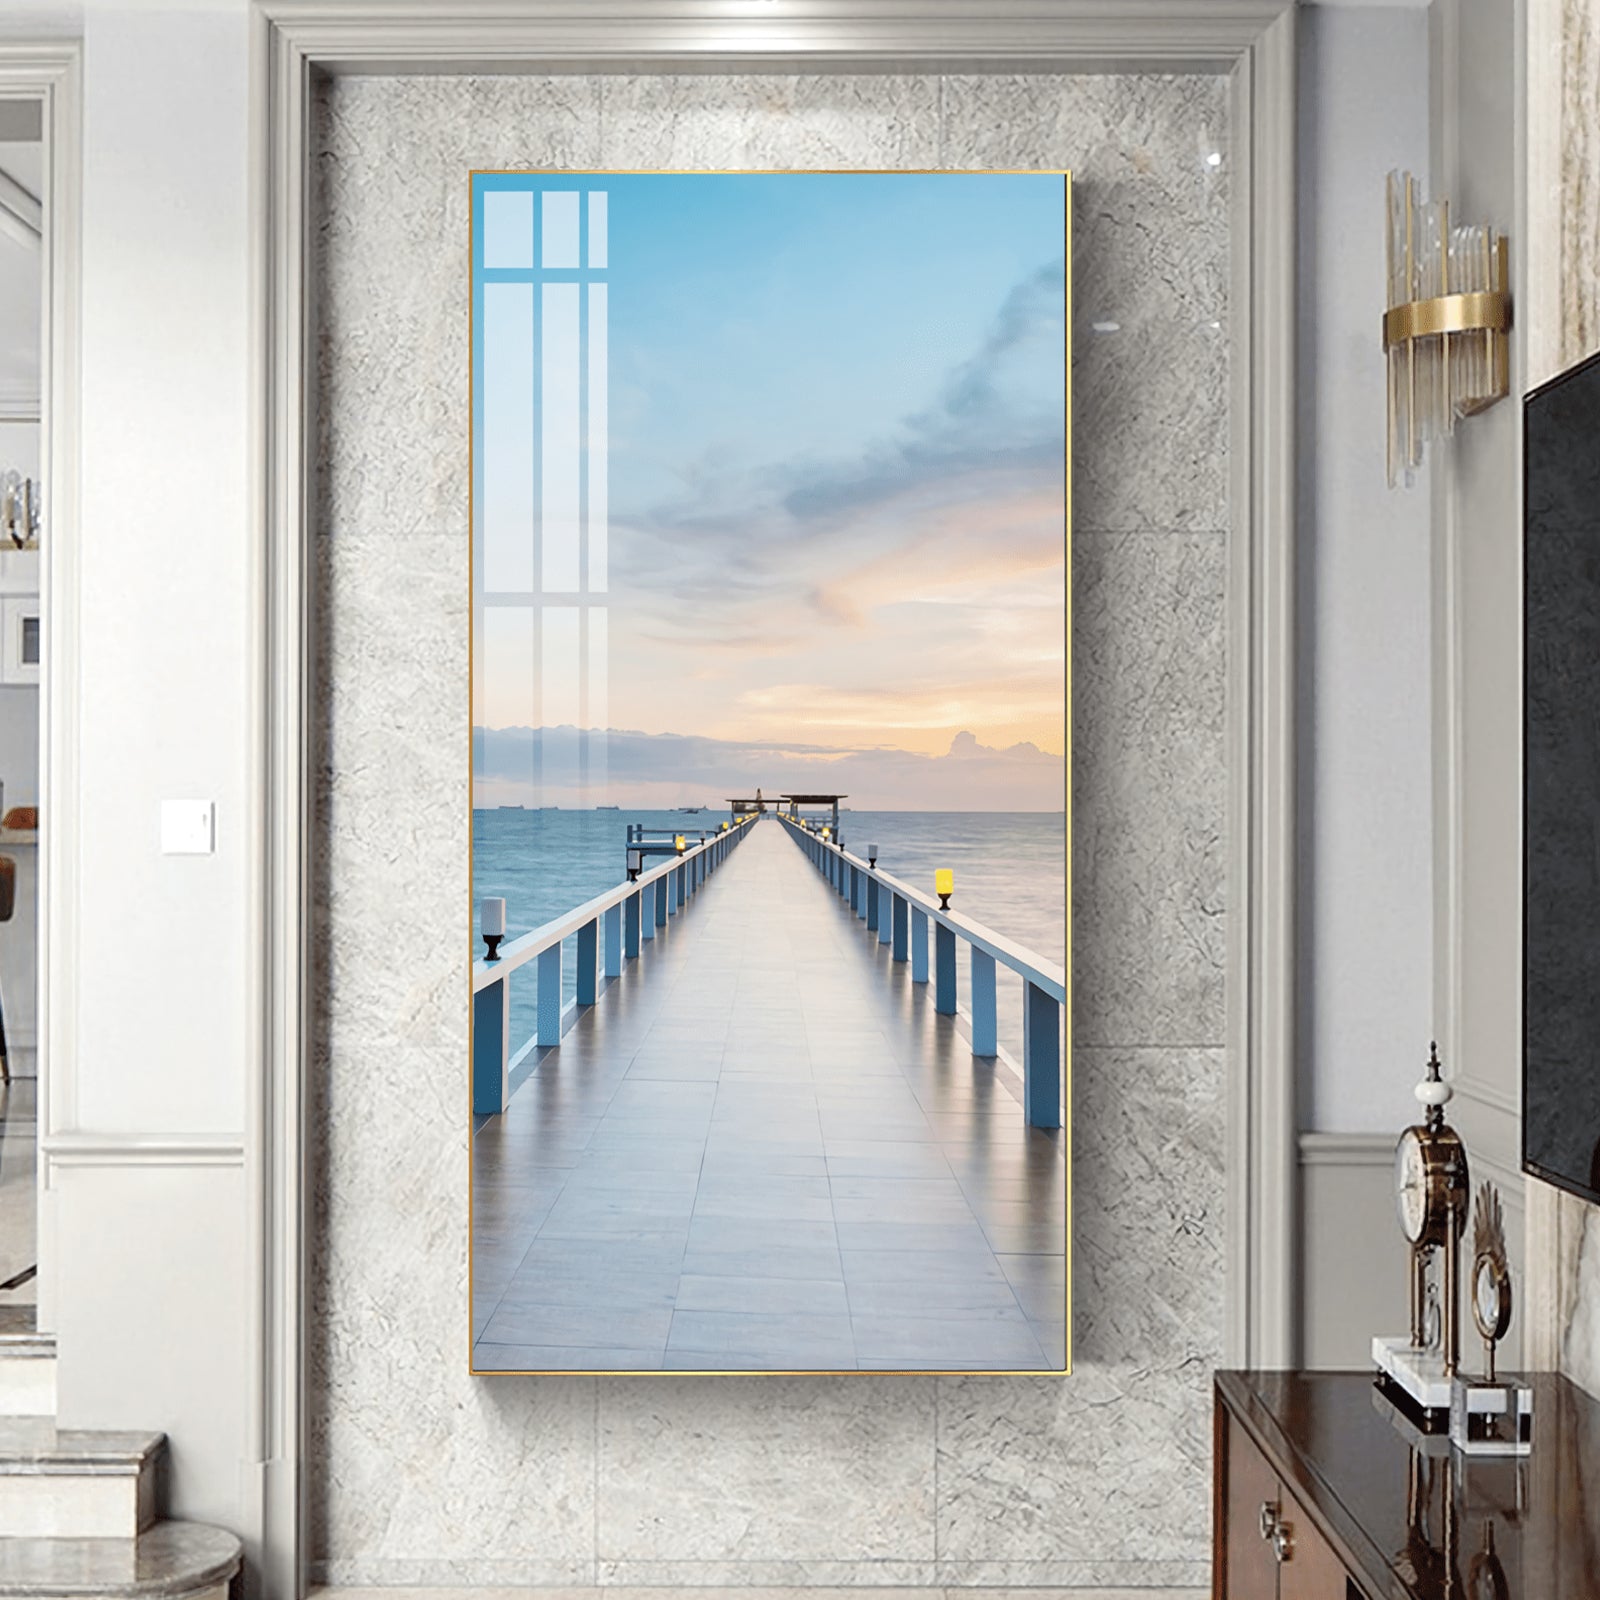 VOFFOV® Bridge On The Sea Landscape Wall Art